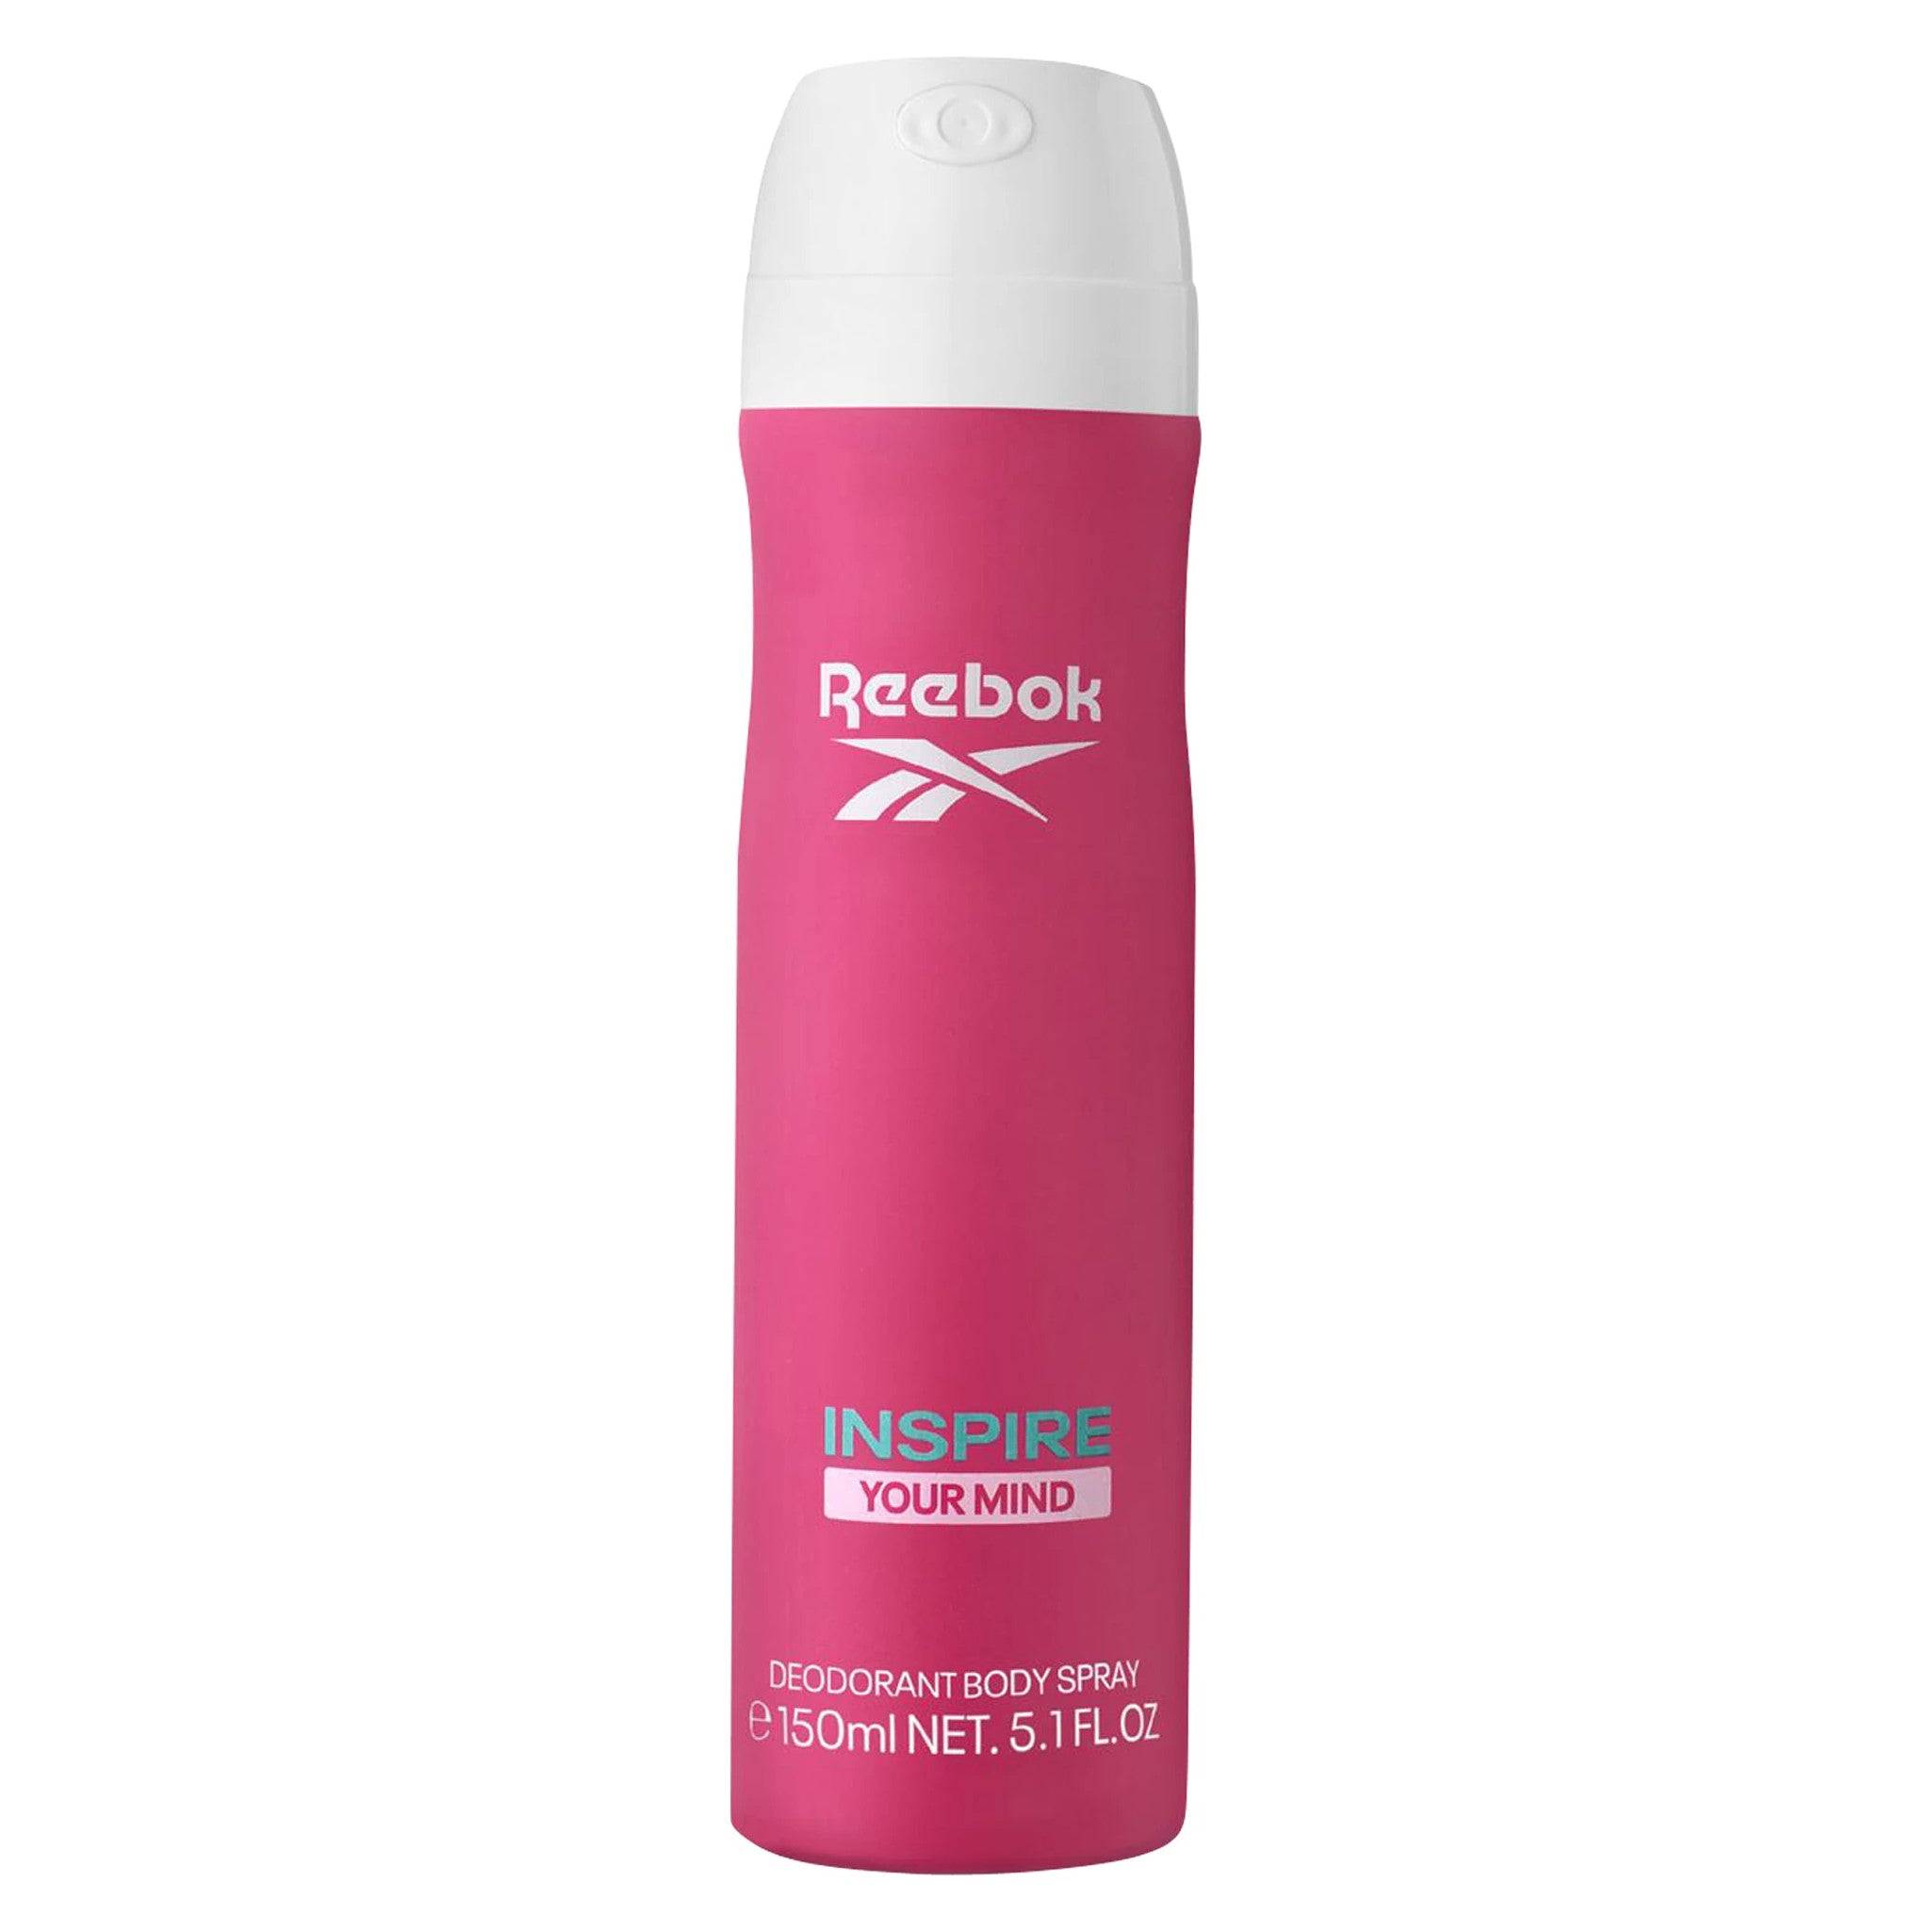 Pink Deodorant 150ml, Deodorant for Women